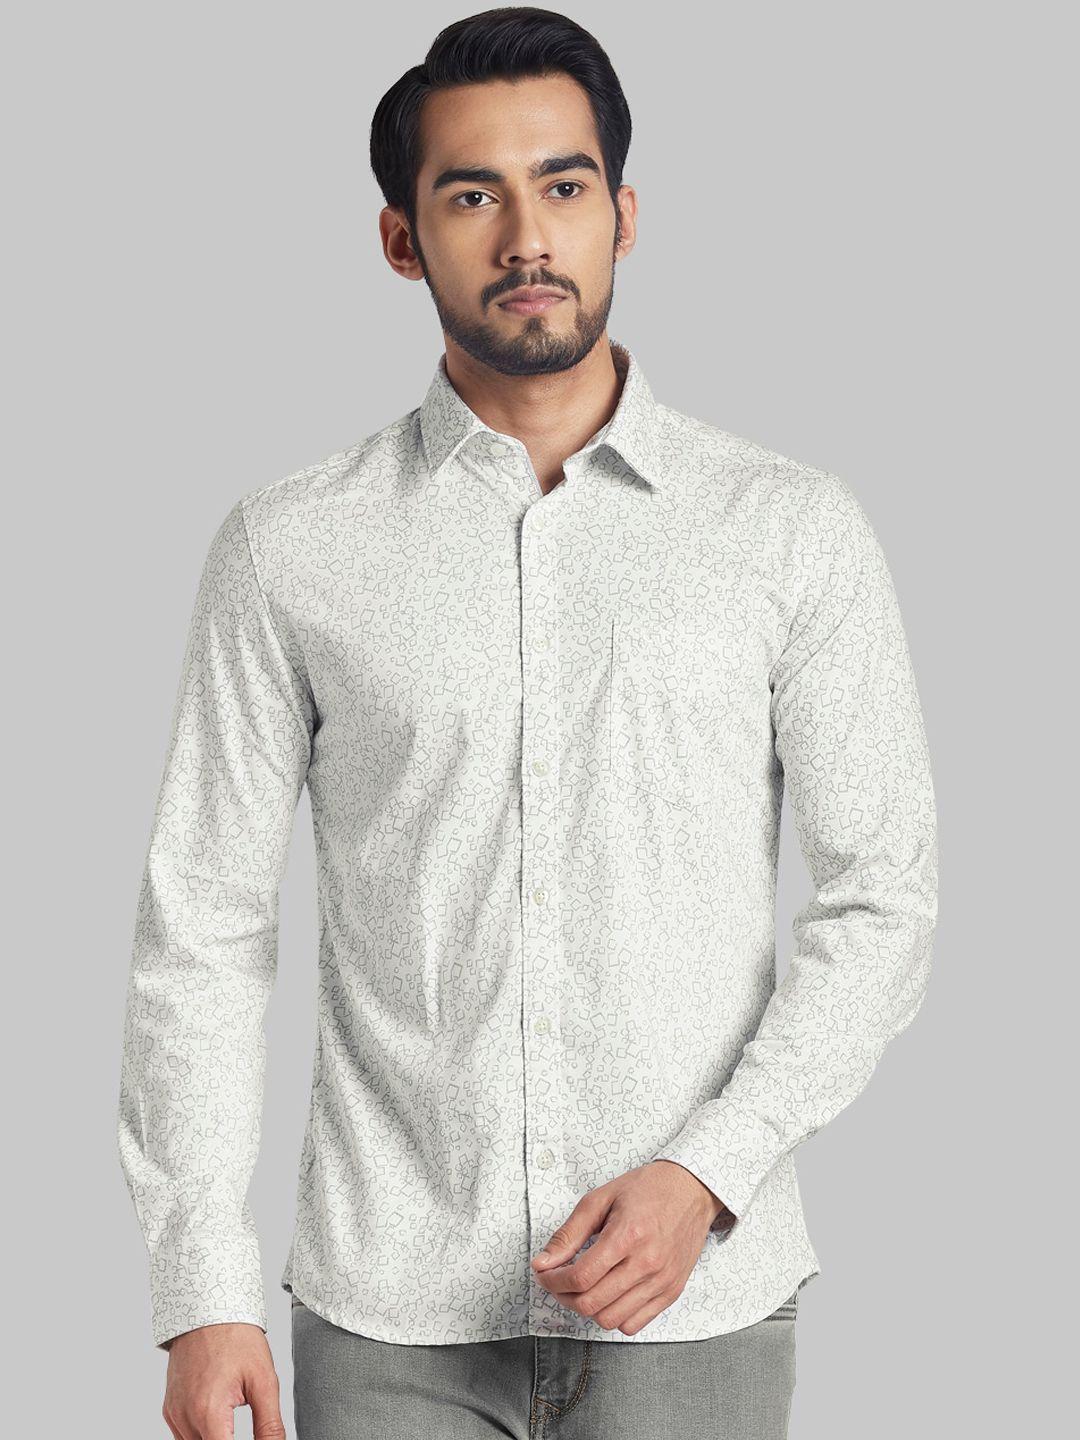 parx-men-white-&-grey-slim-fit-opaque-printed-casual-shirt